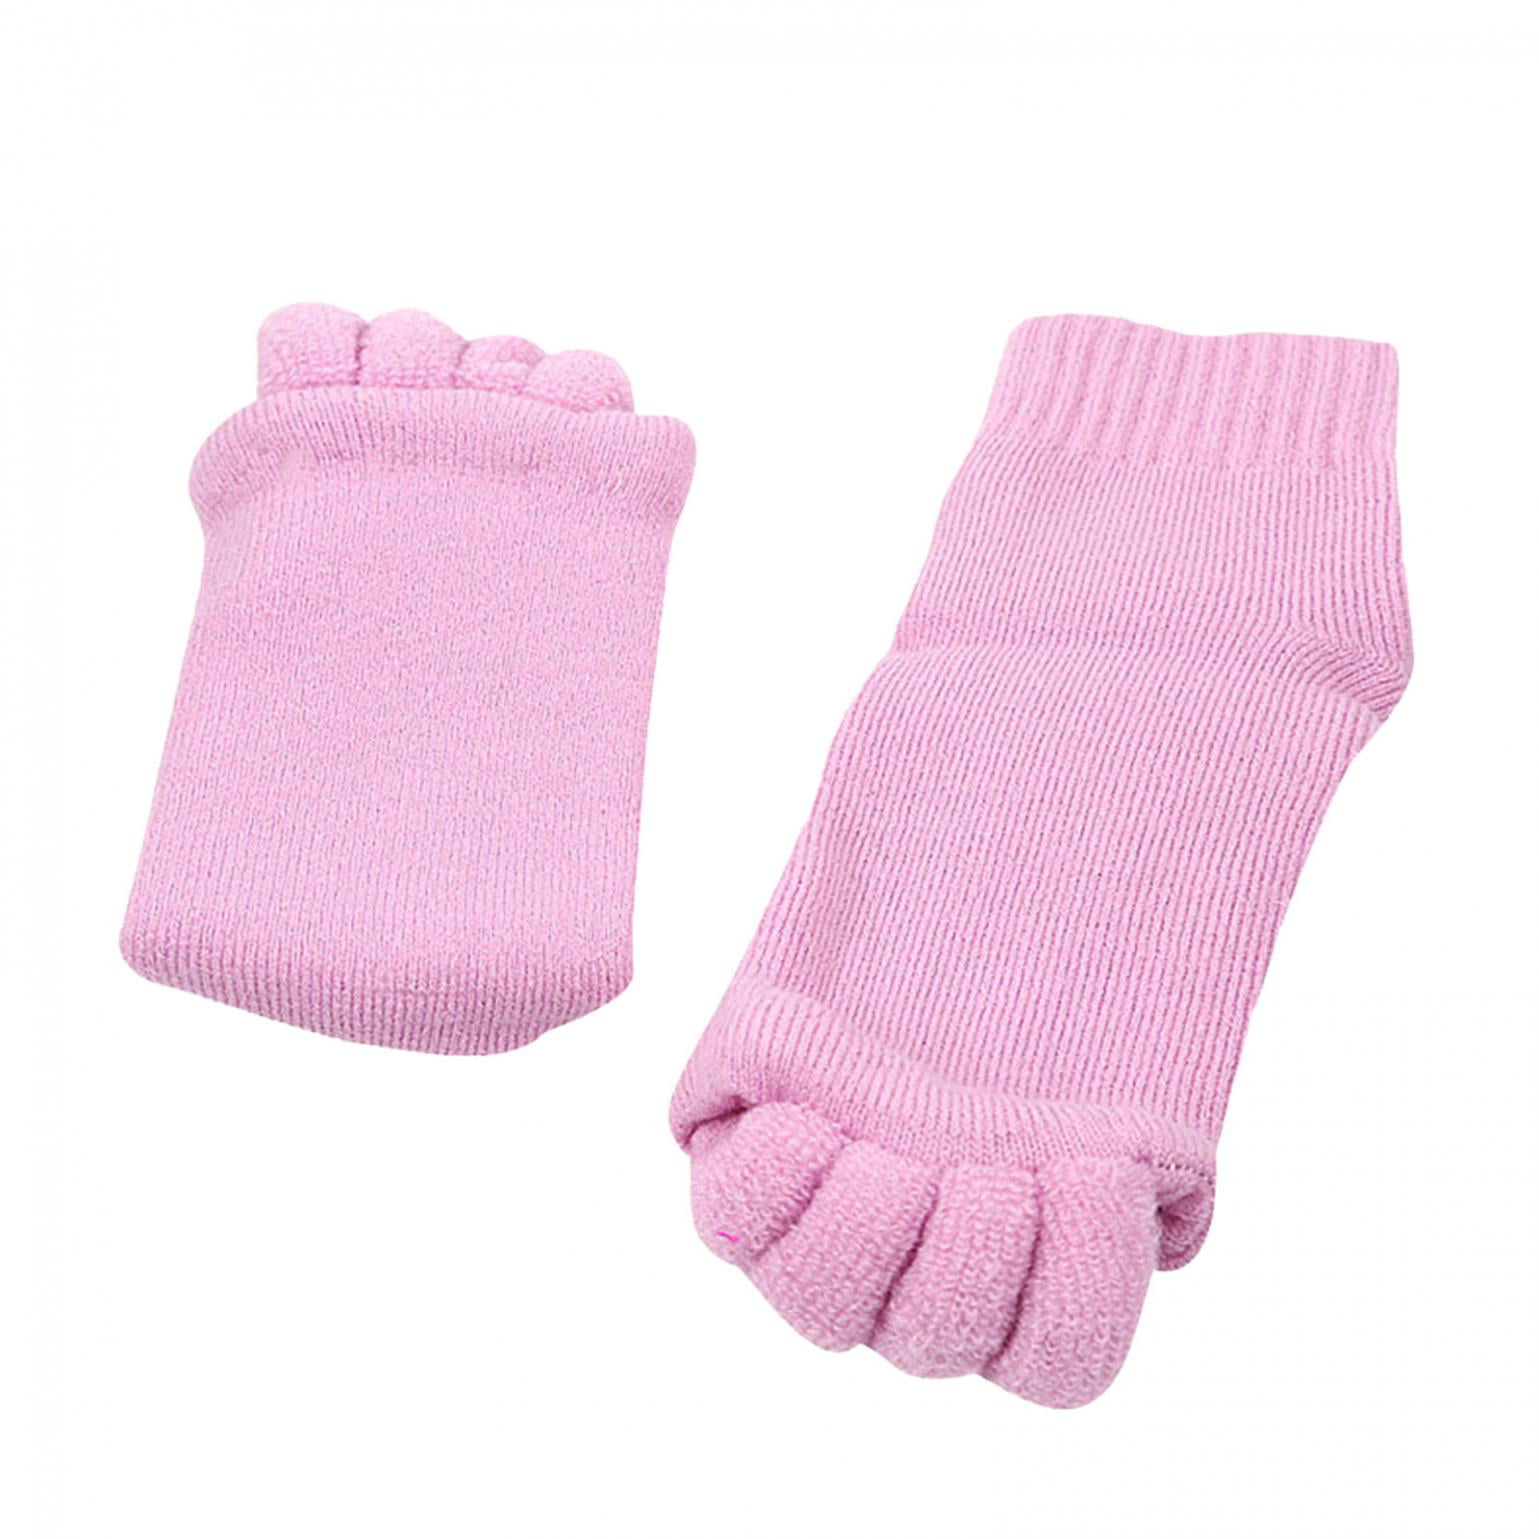 Waymeduo open toe socks correct thumb valgus five toe socks Yoga five finger socks female nitrile cotton toe socks White 